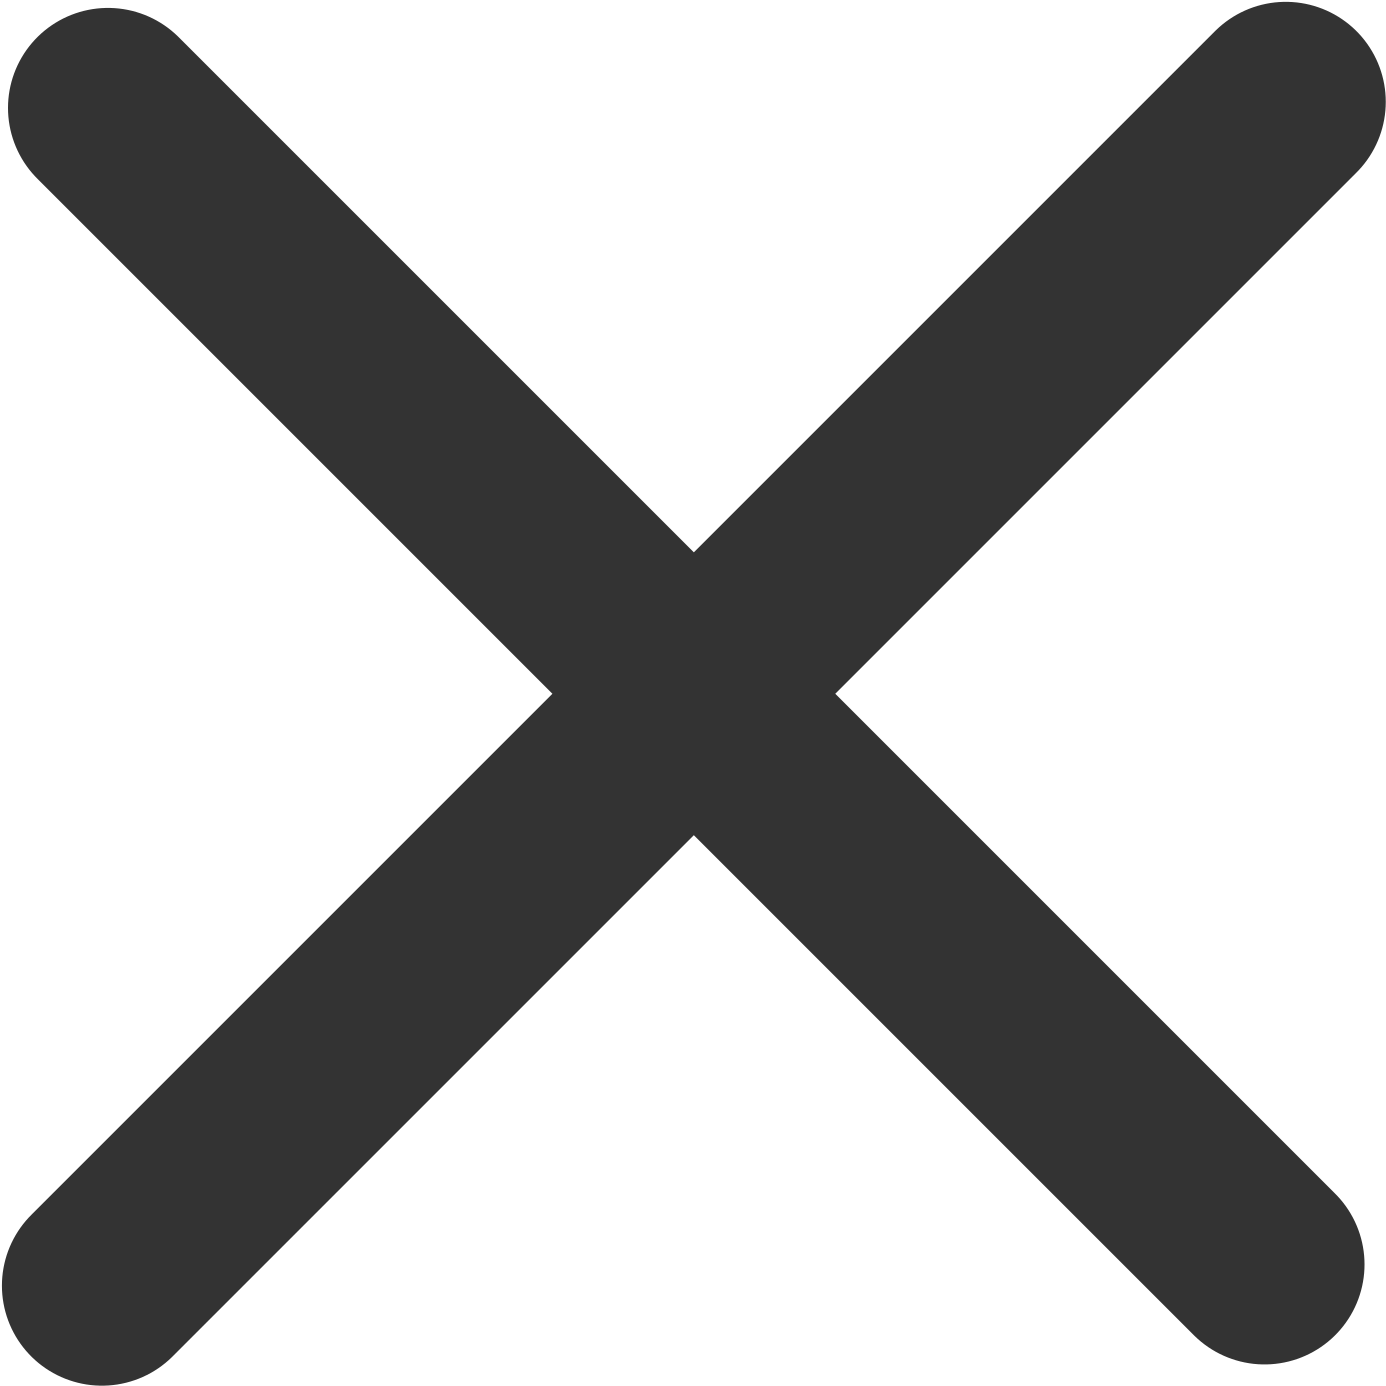 Black X Mark Icon PNG image